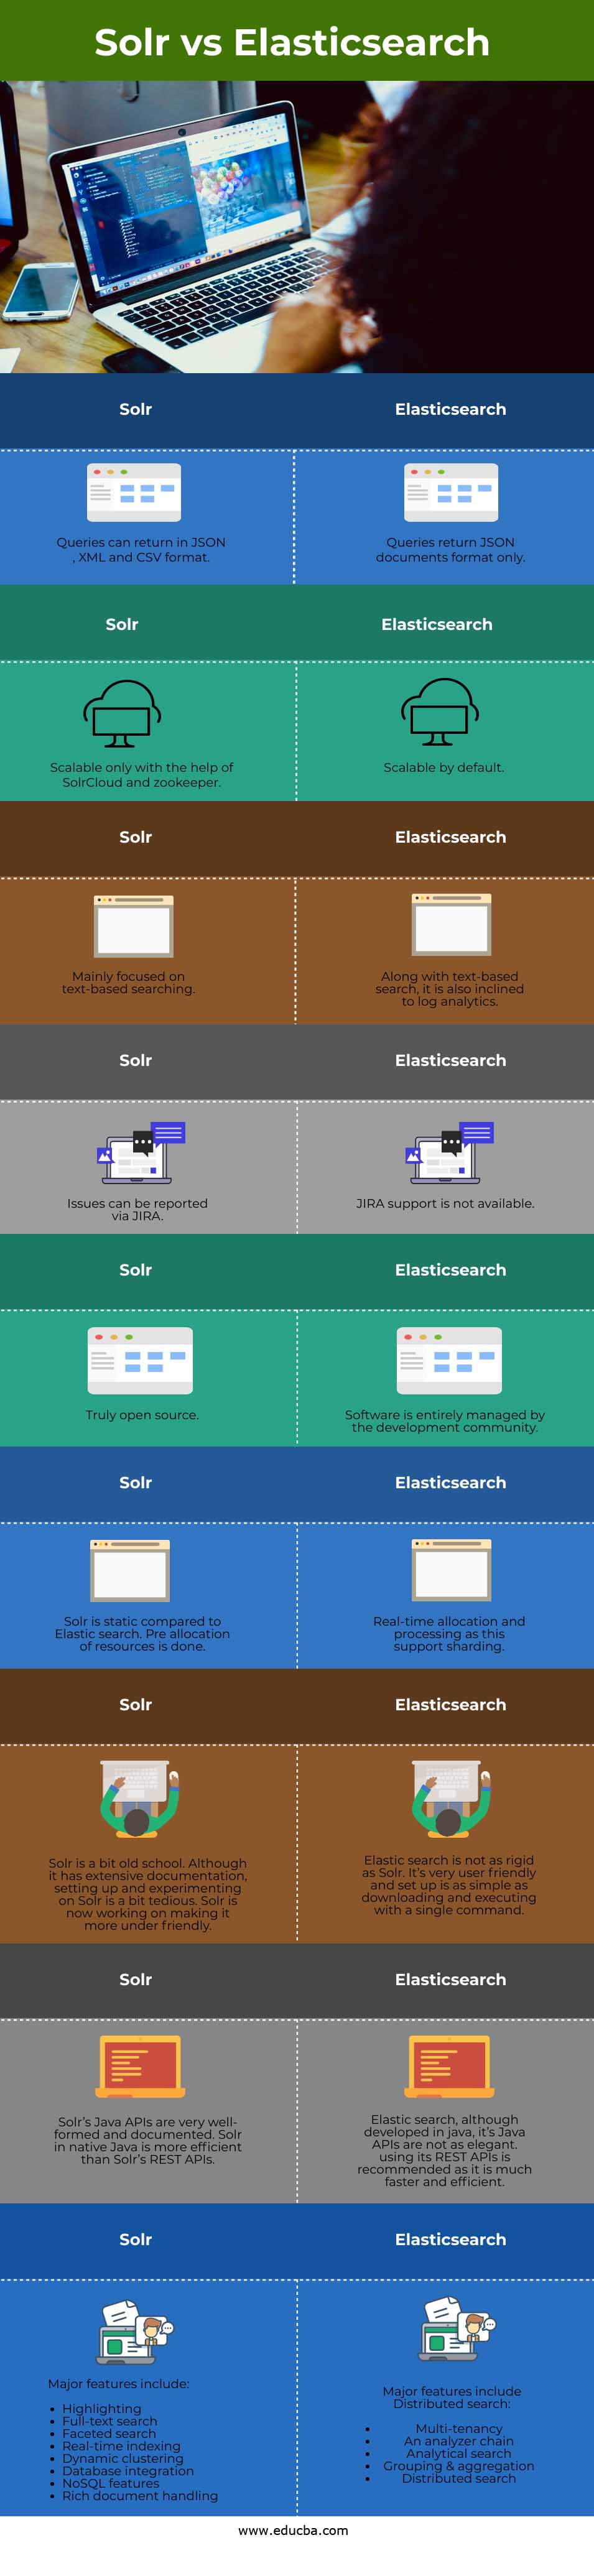 Solr vs Elasticsearch info